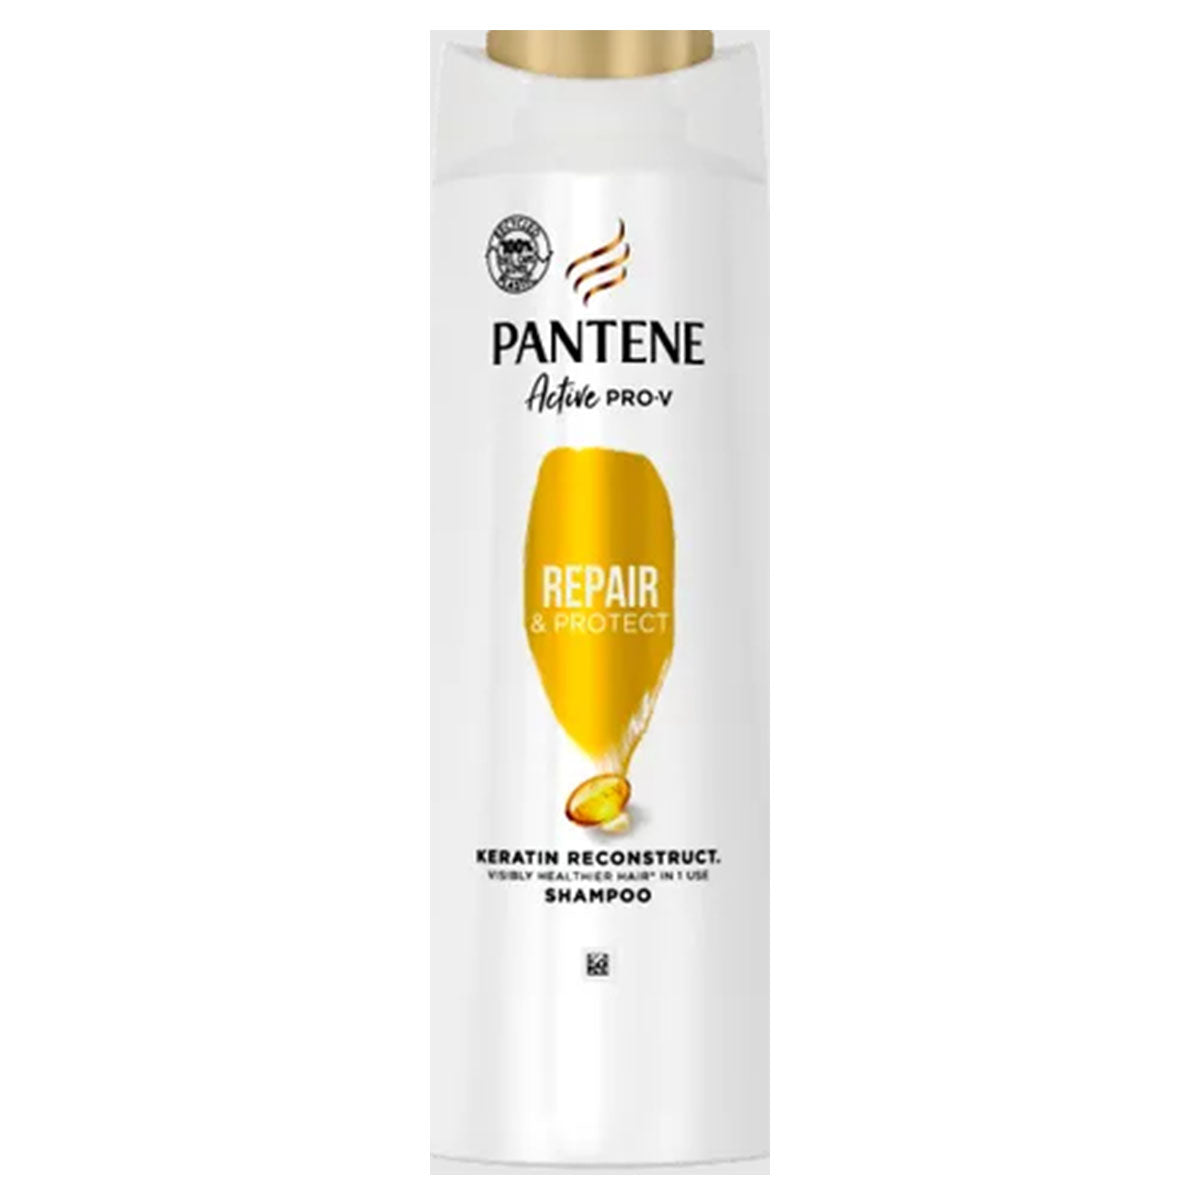 Pantene - Repair & Protect Shampoo - 270ml - Continental Food Store